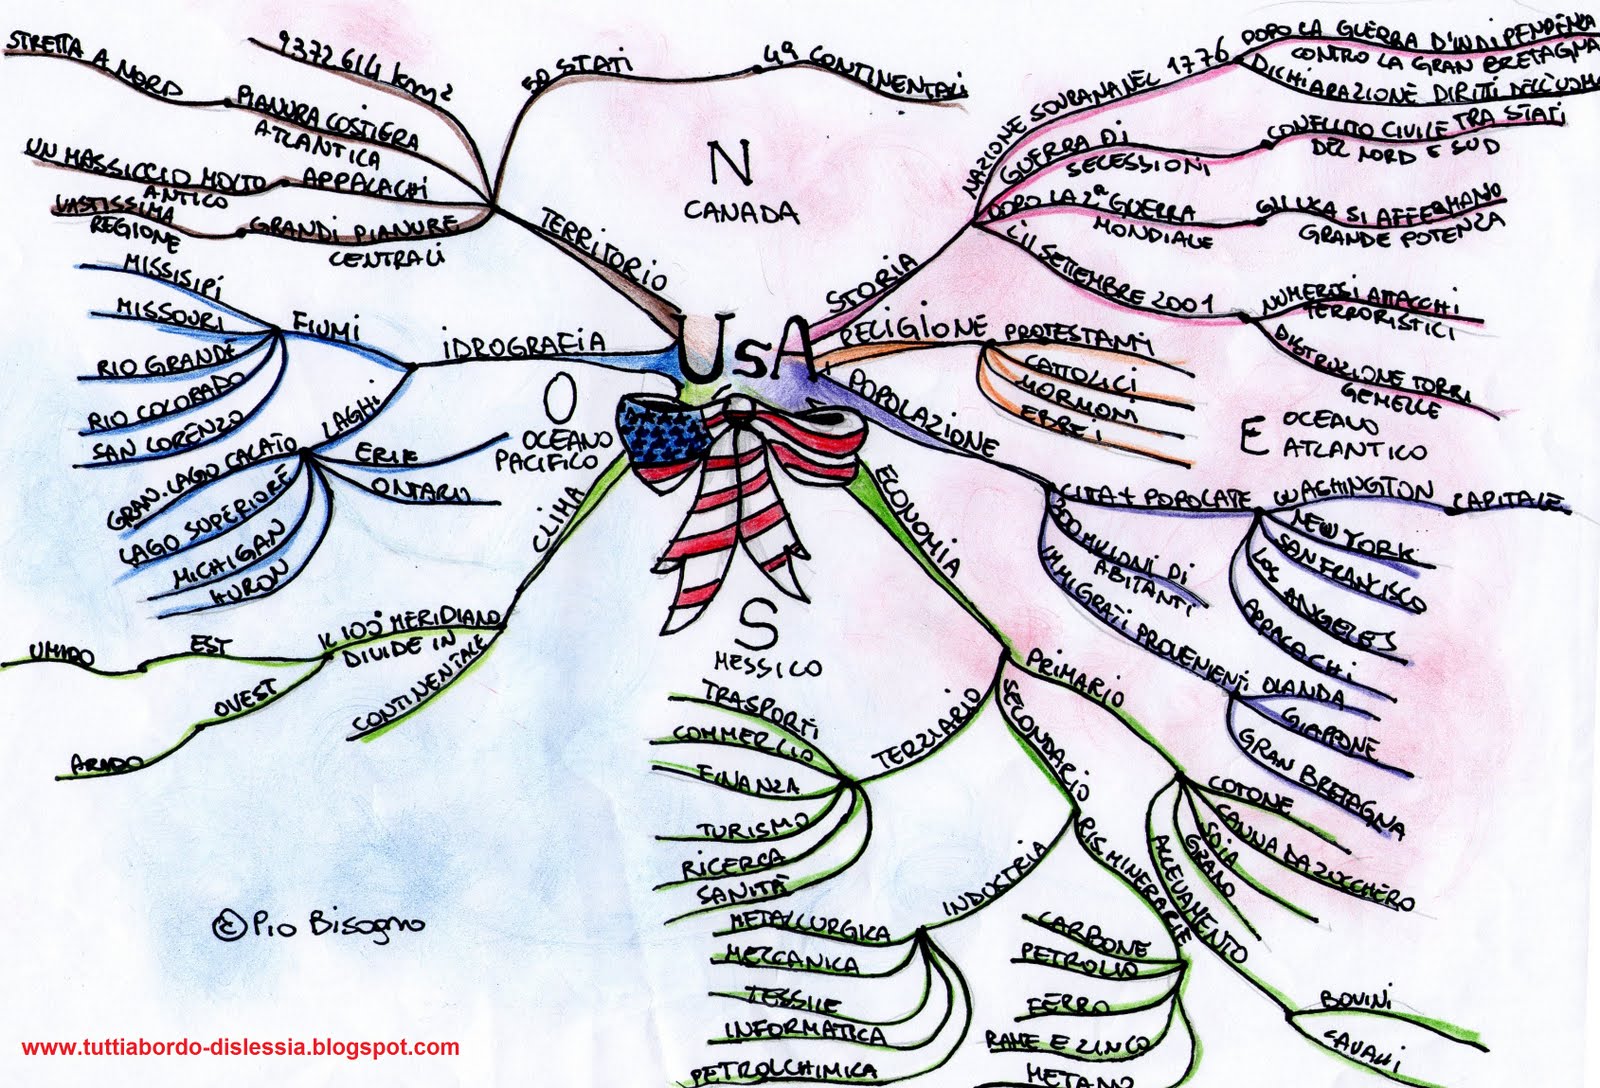 mappa mentale USA tutti a bordo-dislessia.jpg Mappa+mentale+USA+tutti+a+bordo-dislessia